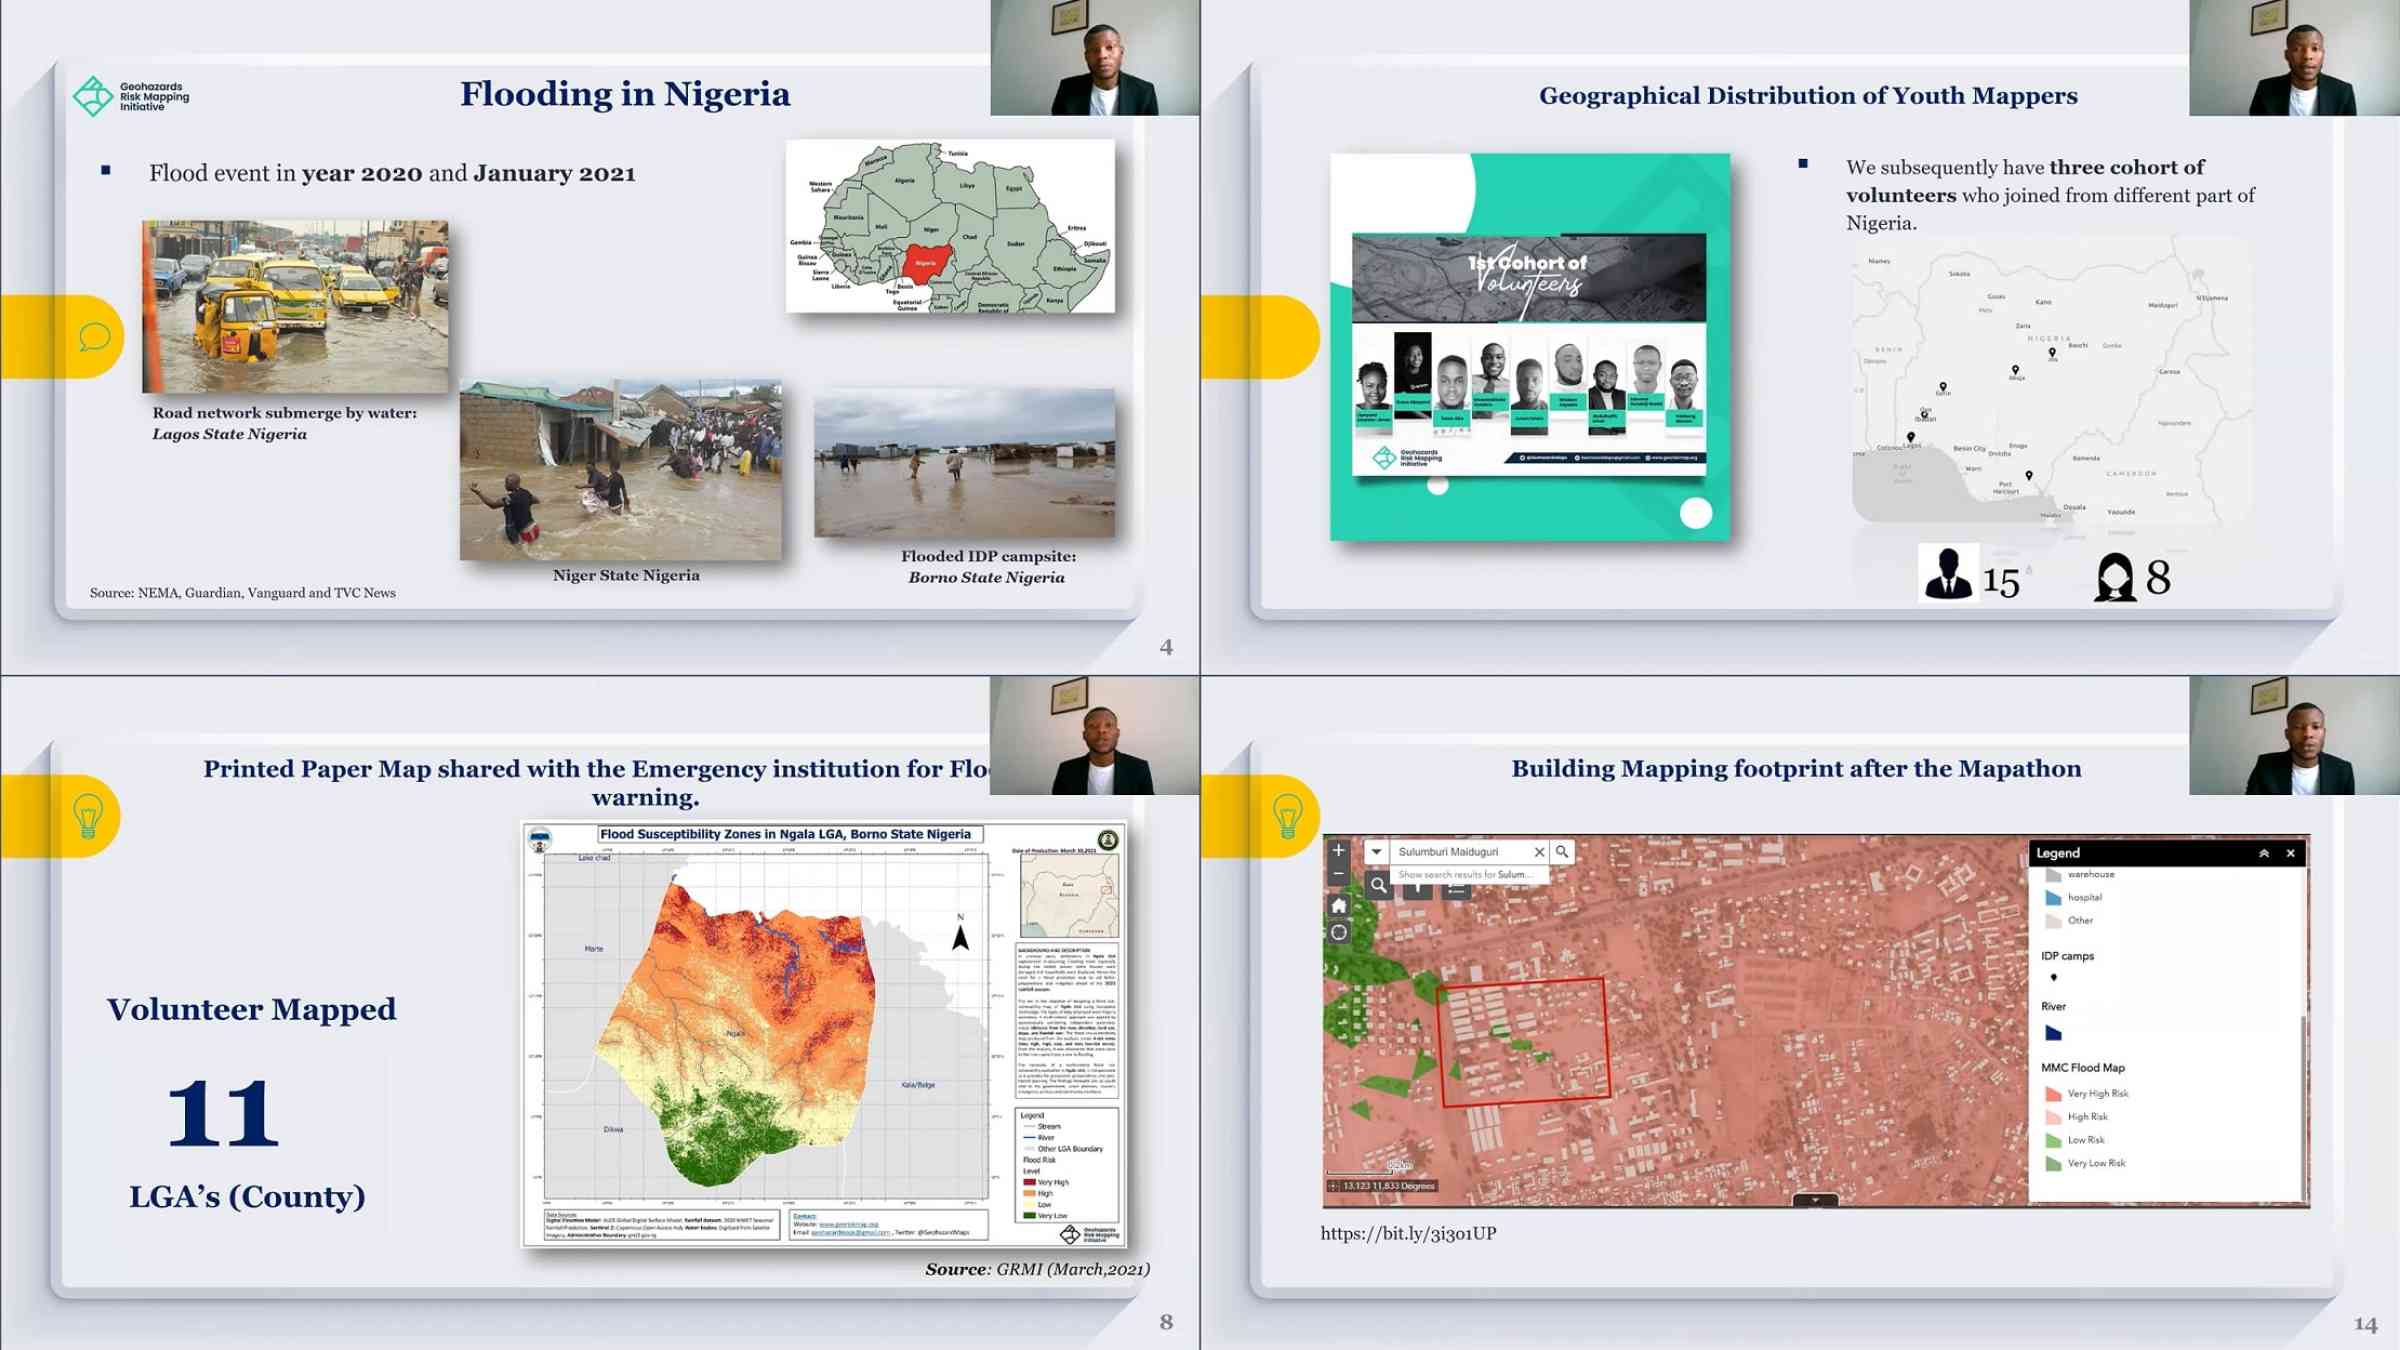 Geohazard Risk Mapping Initiative presentation